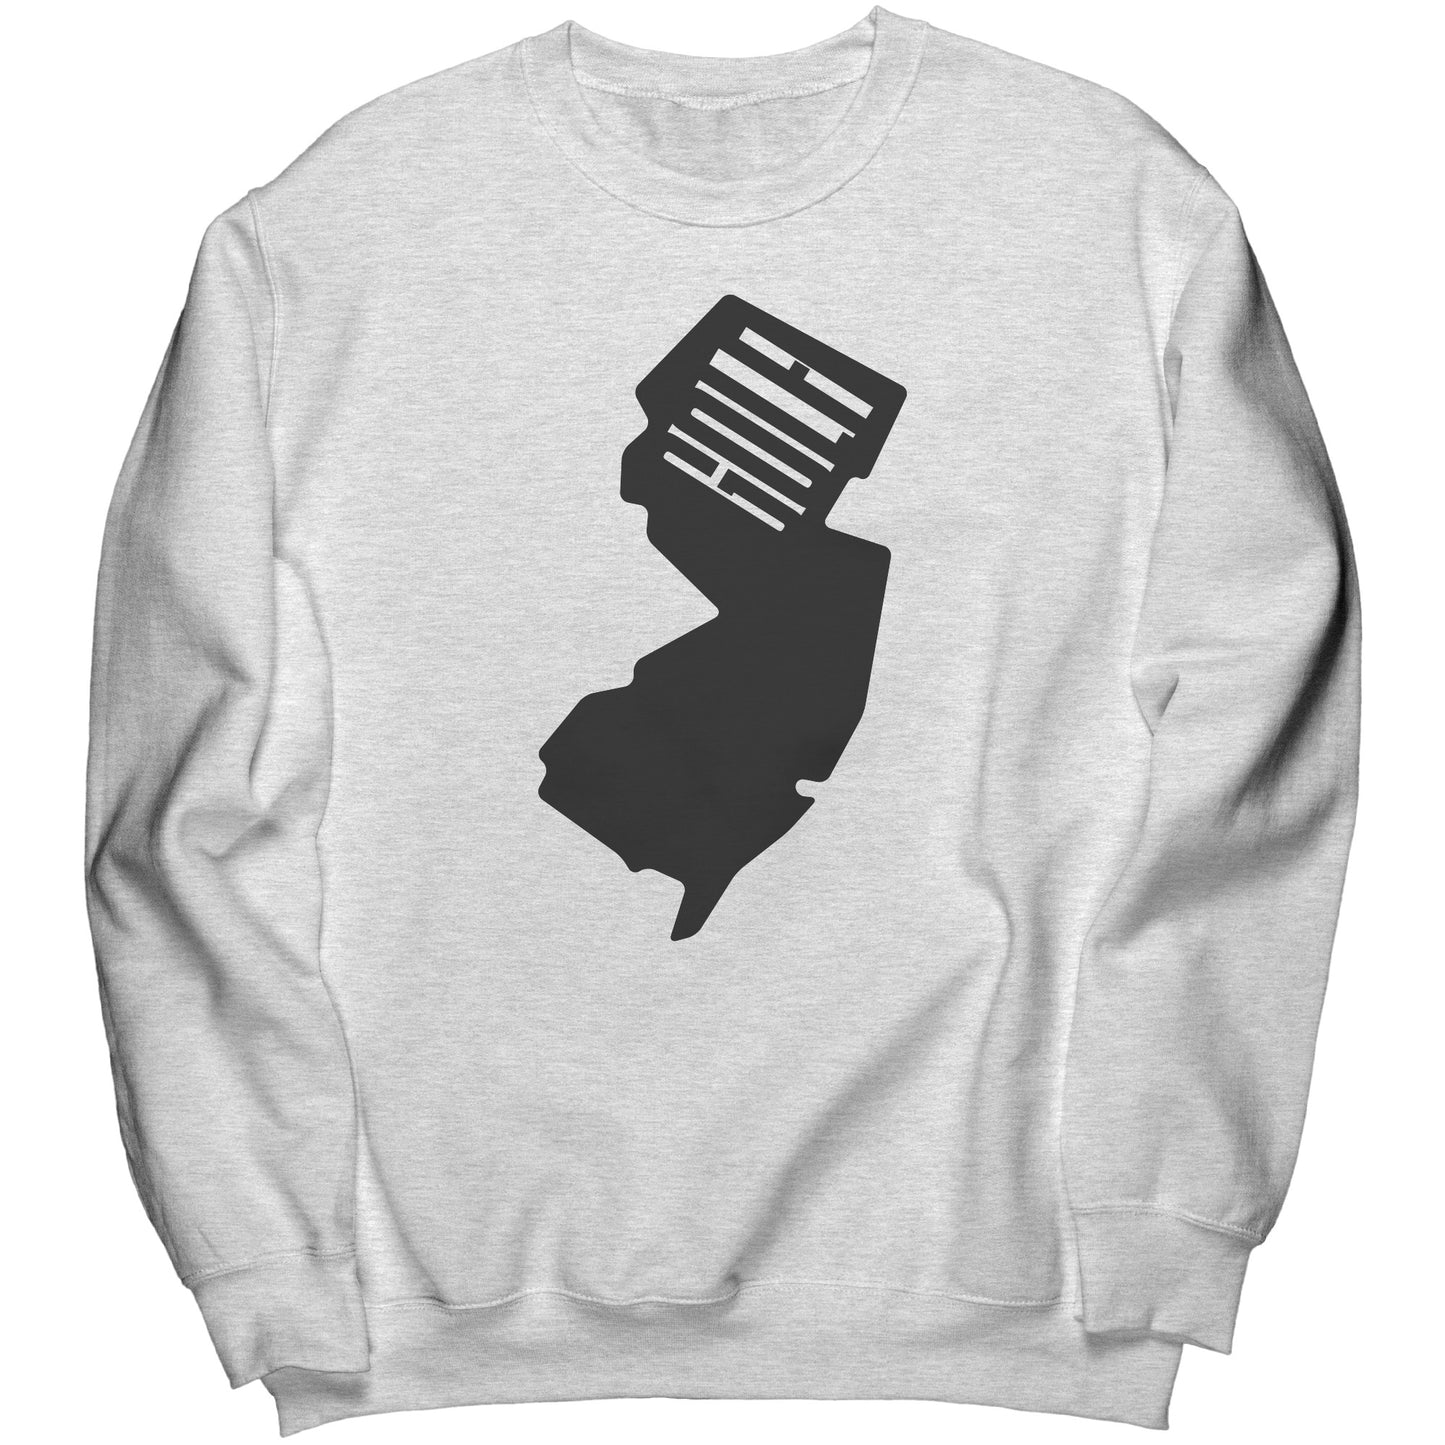 New Jersey "Golf" Sweatshirt